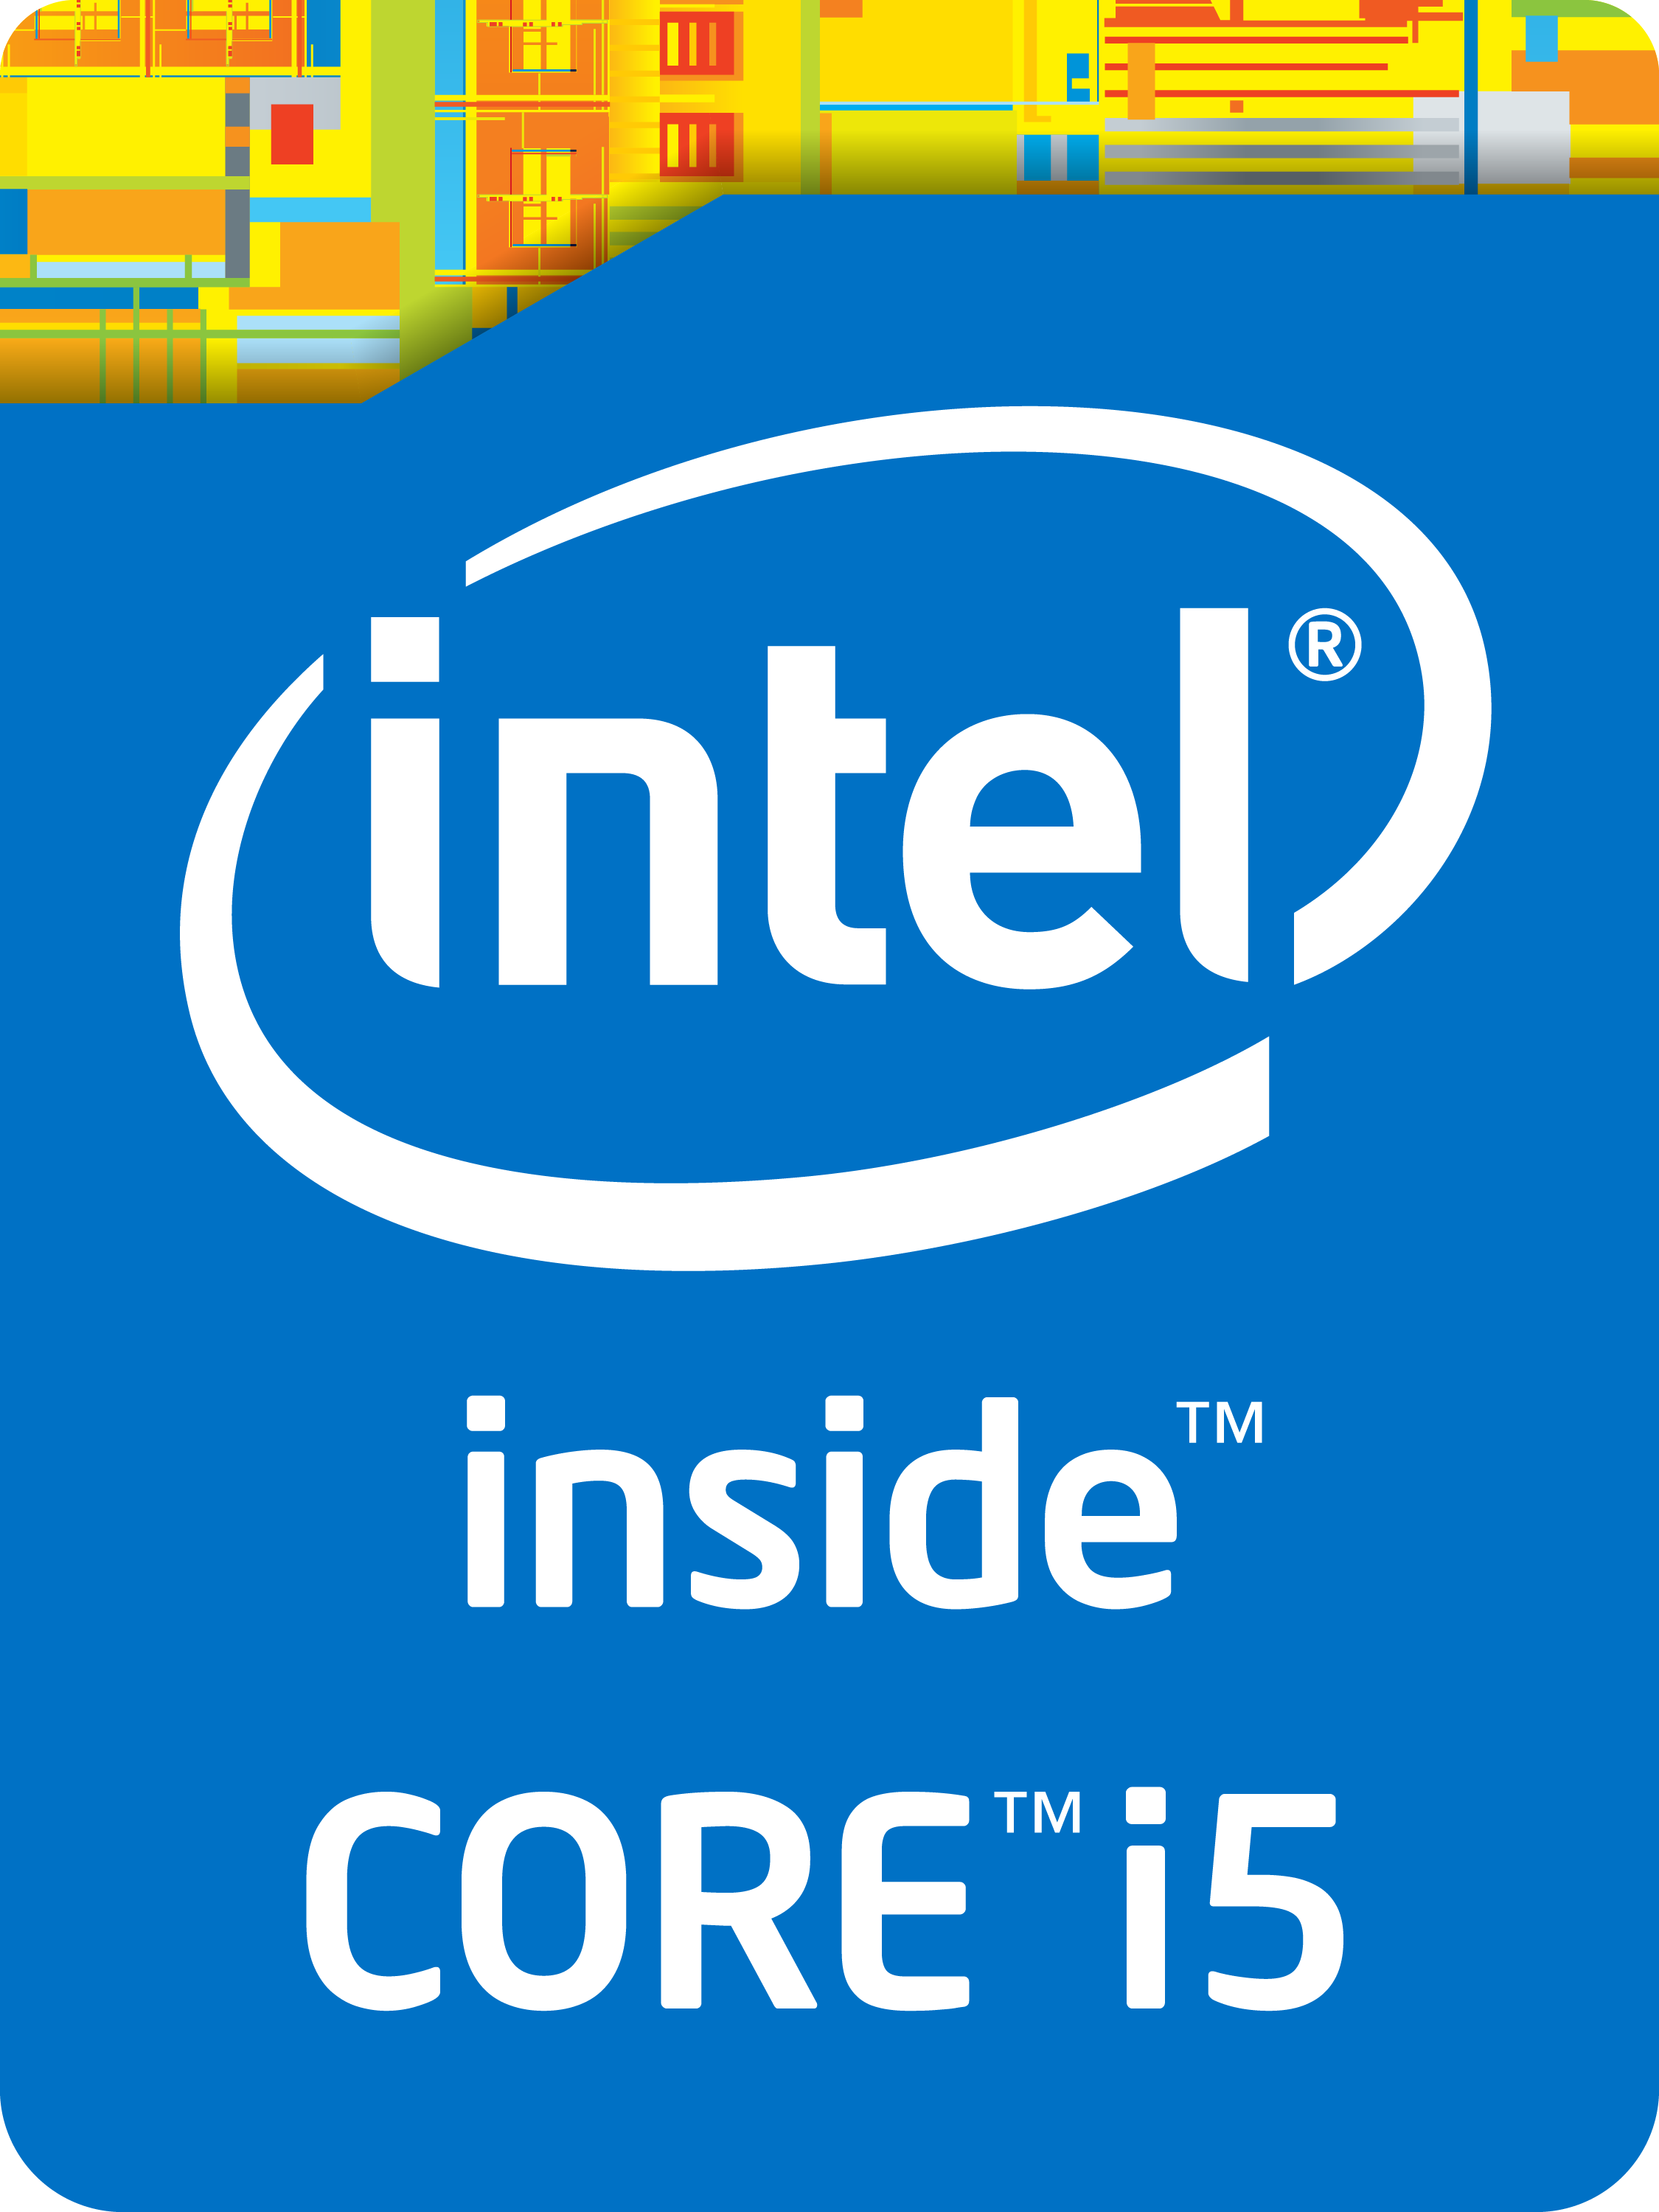 Intel Core I5 4310u Notebook Processor Notebookcheck Net Tech